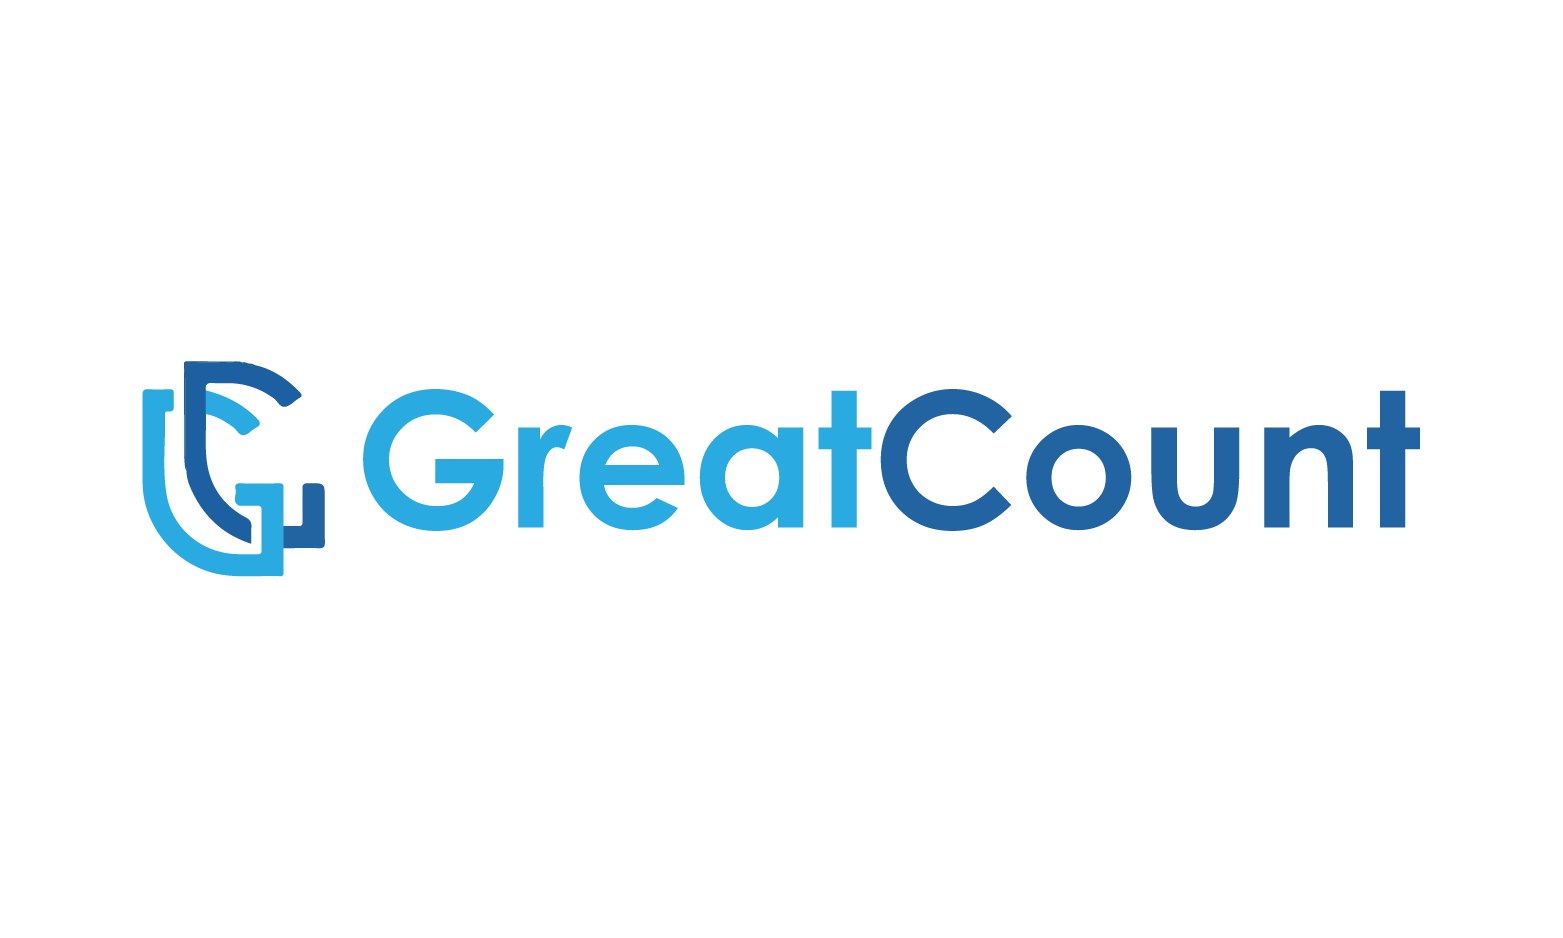 GreatCount.com - Creative brandable domain for sale